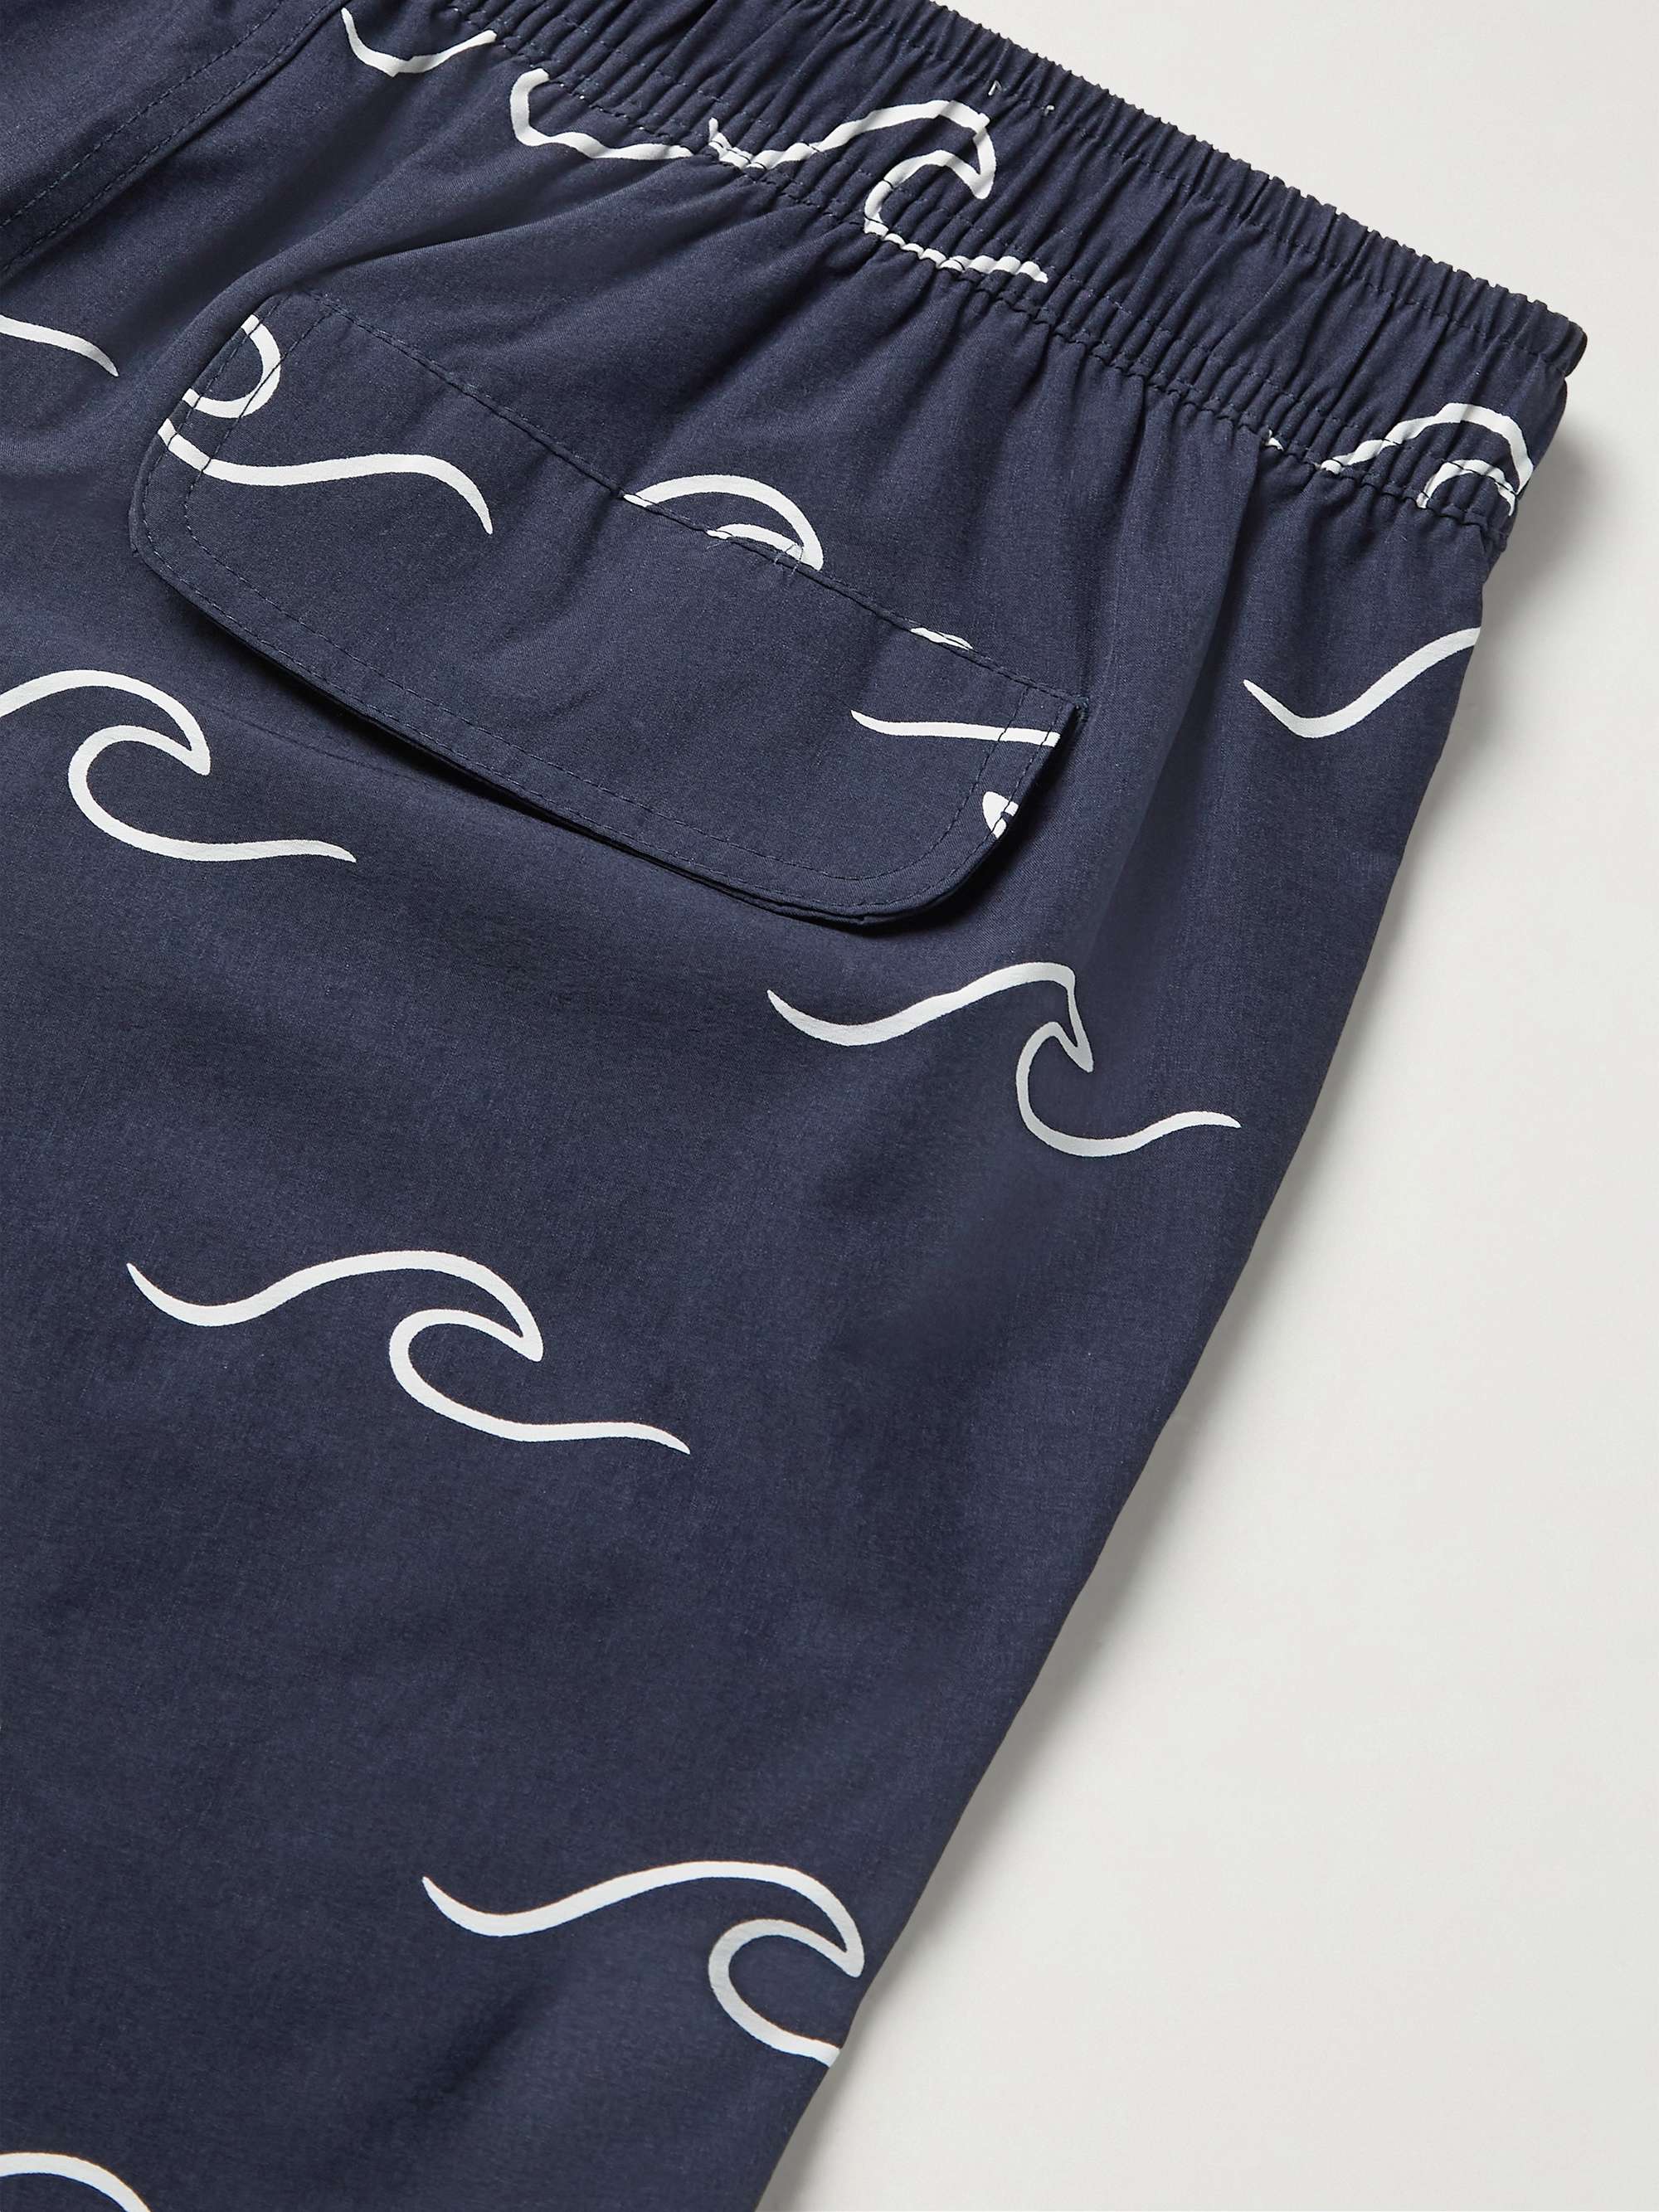 ONIA Calder Mid-Length Printed Swim Shorts